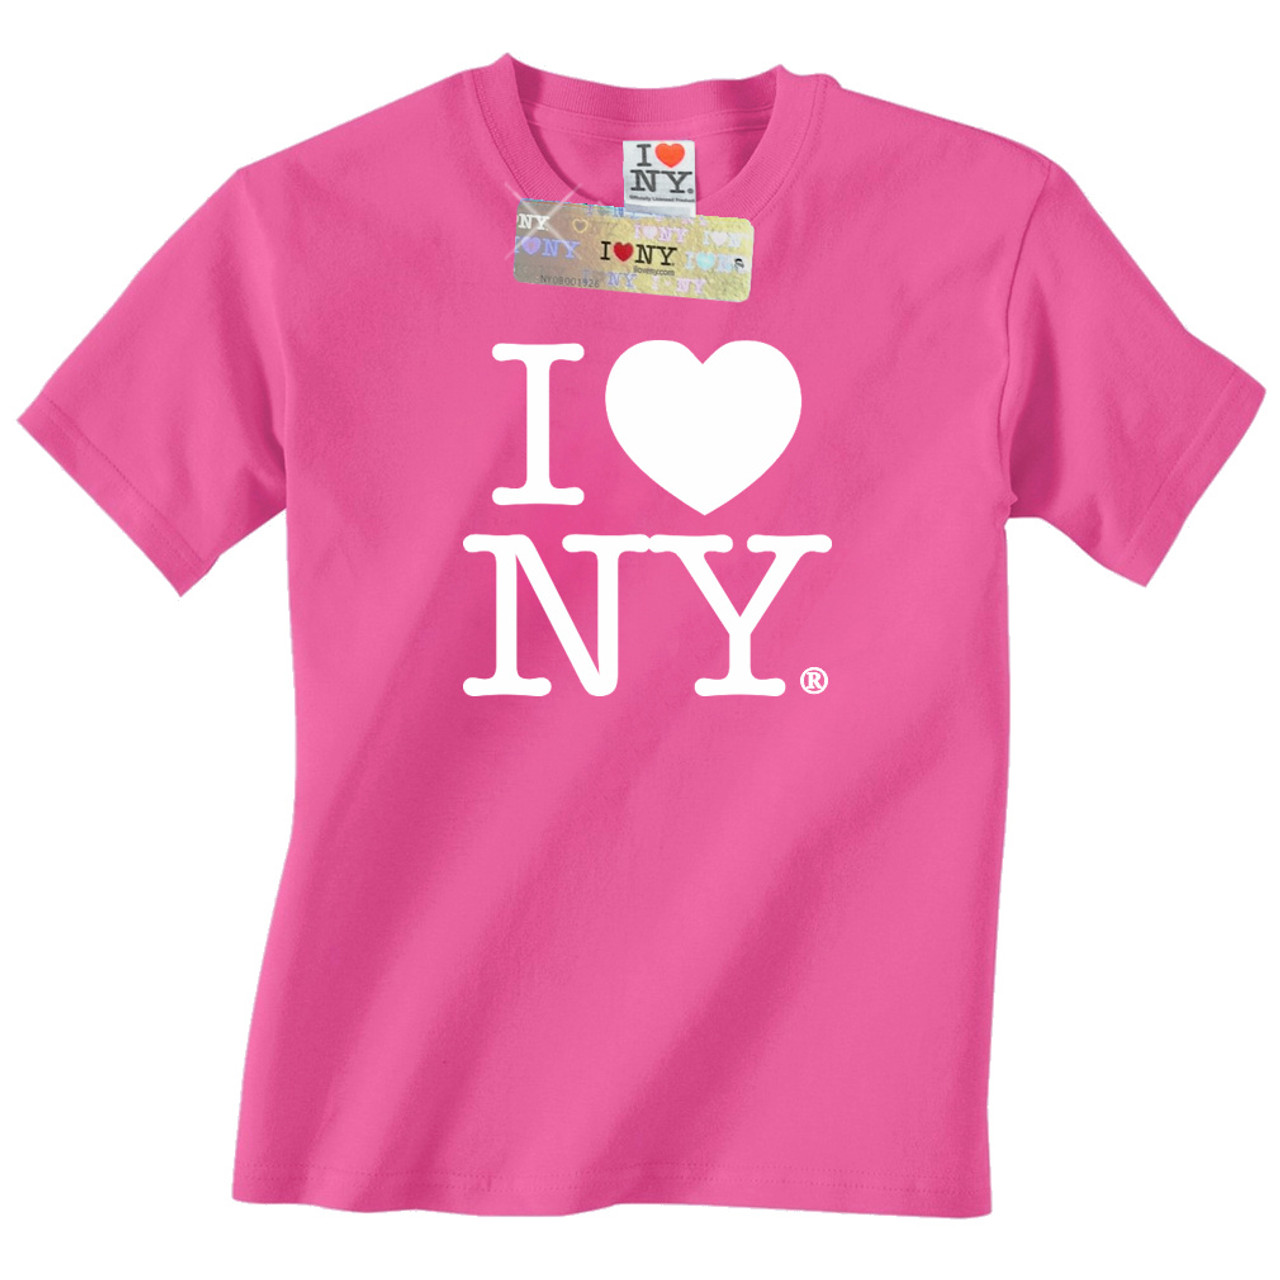 Футболка NY Love me. Футболка i Love New York. Футболка ш дщму тн. Розовая футболка Love. Вики лове